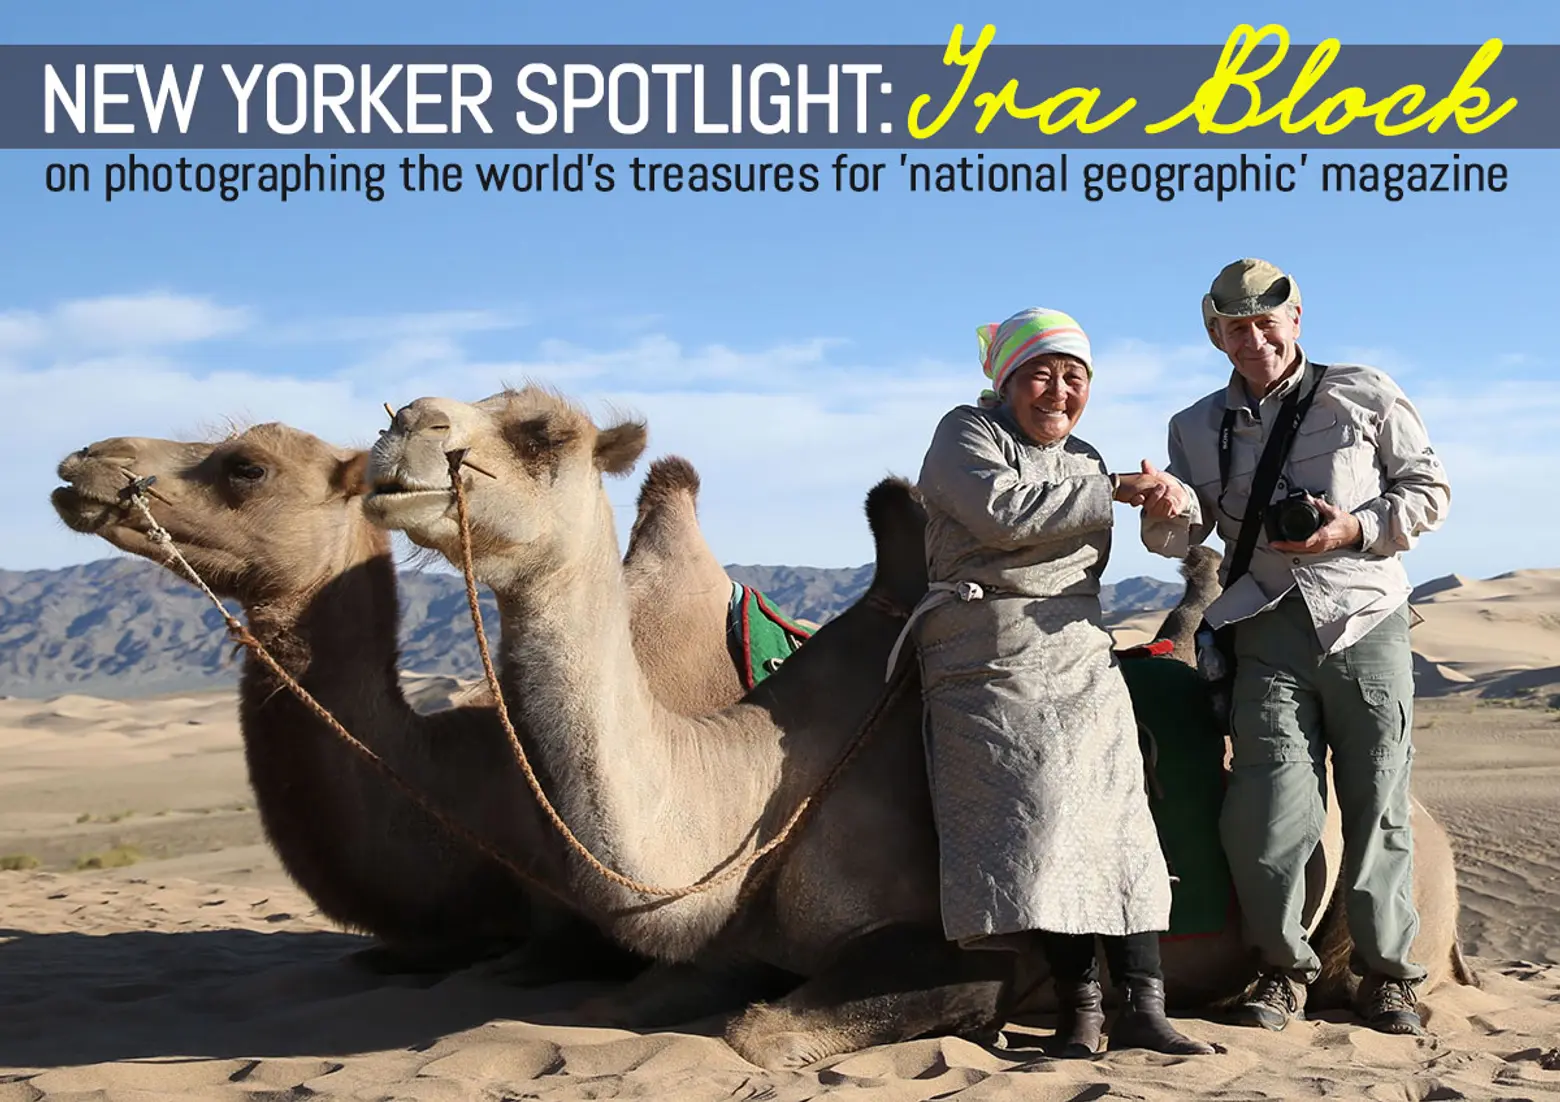 New Yorker Spotlight: Ira Block Photographs World Treasures for National Geographic